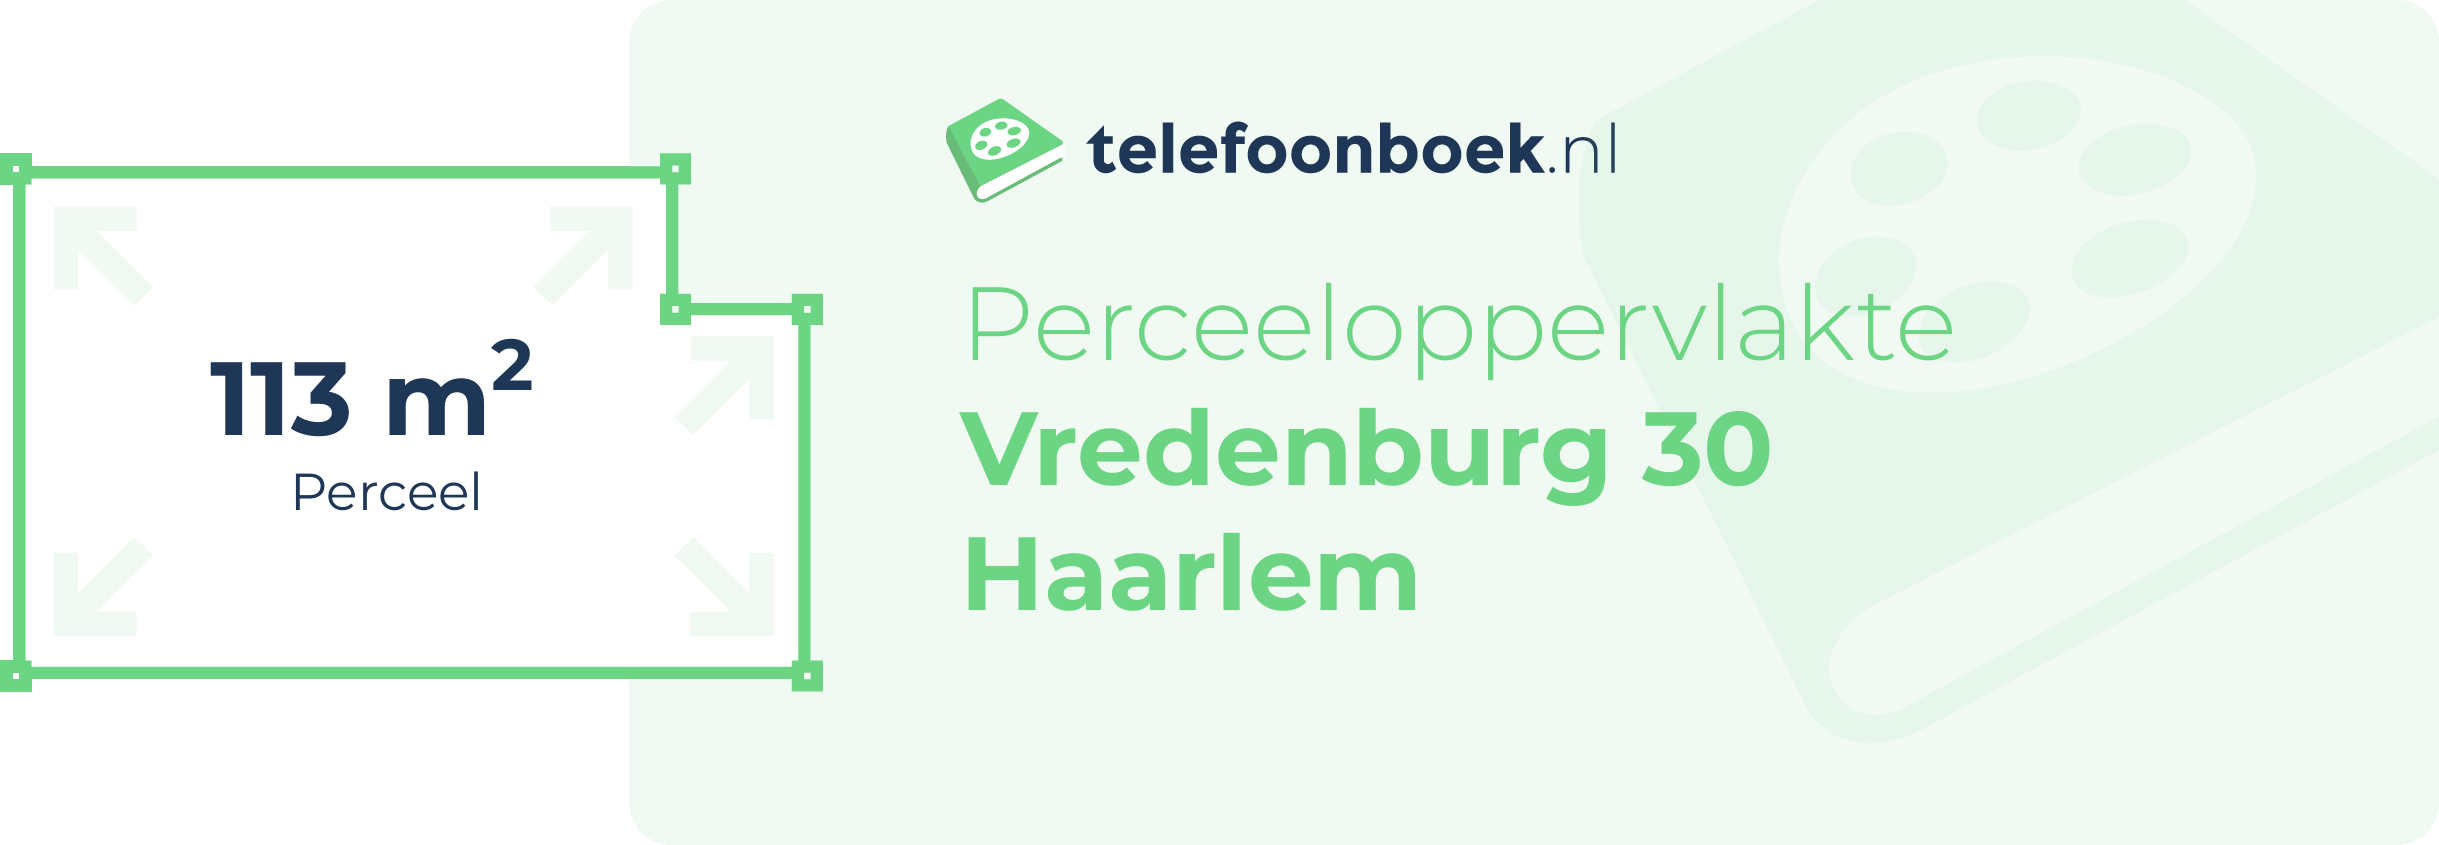 Perceeloppervlakte Vredenburg 30 Haarlem